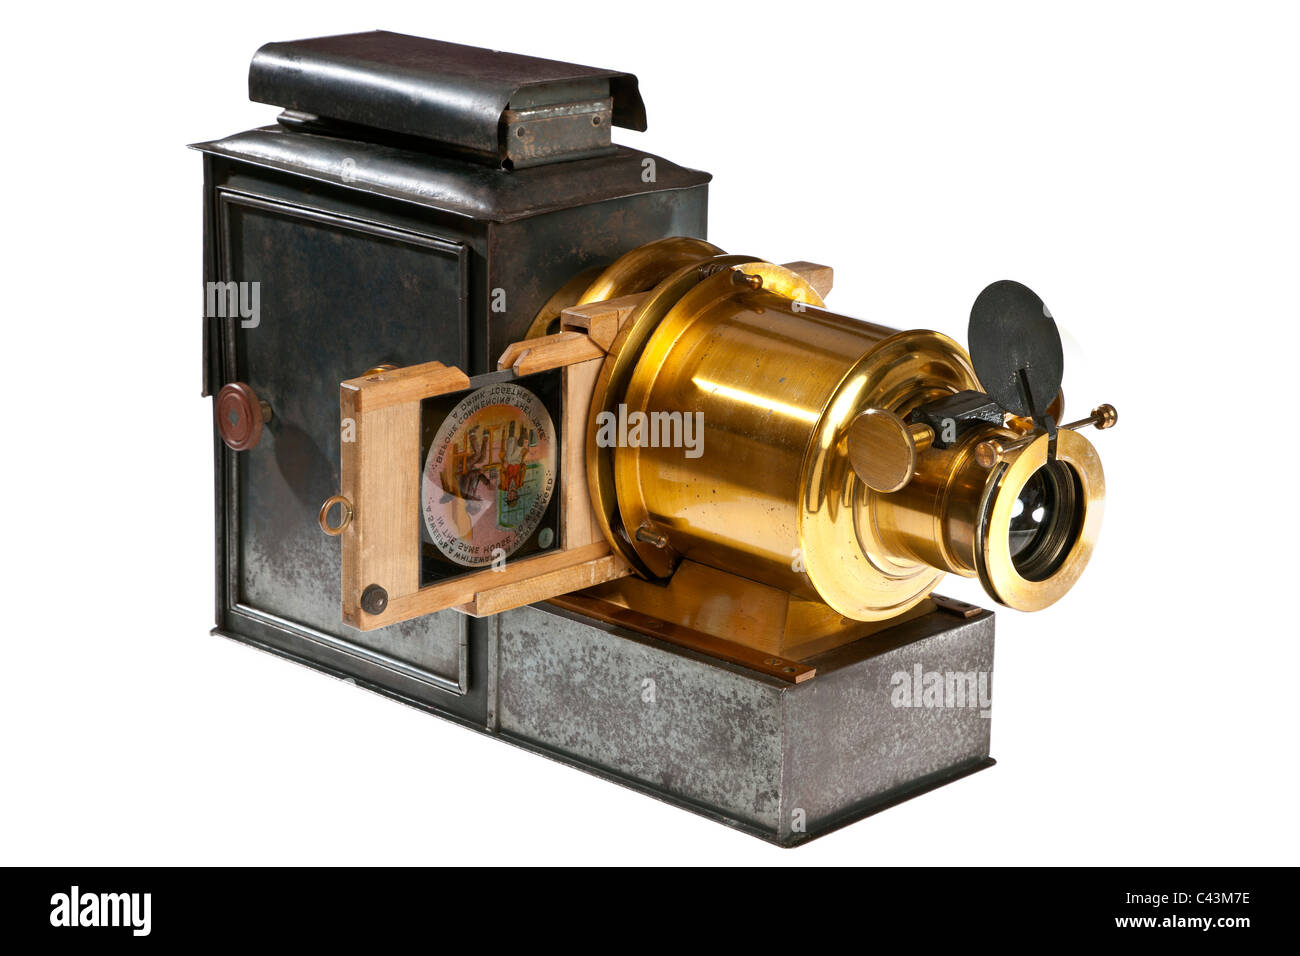 Magic lantern hi-res stock photography and images - Alamy